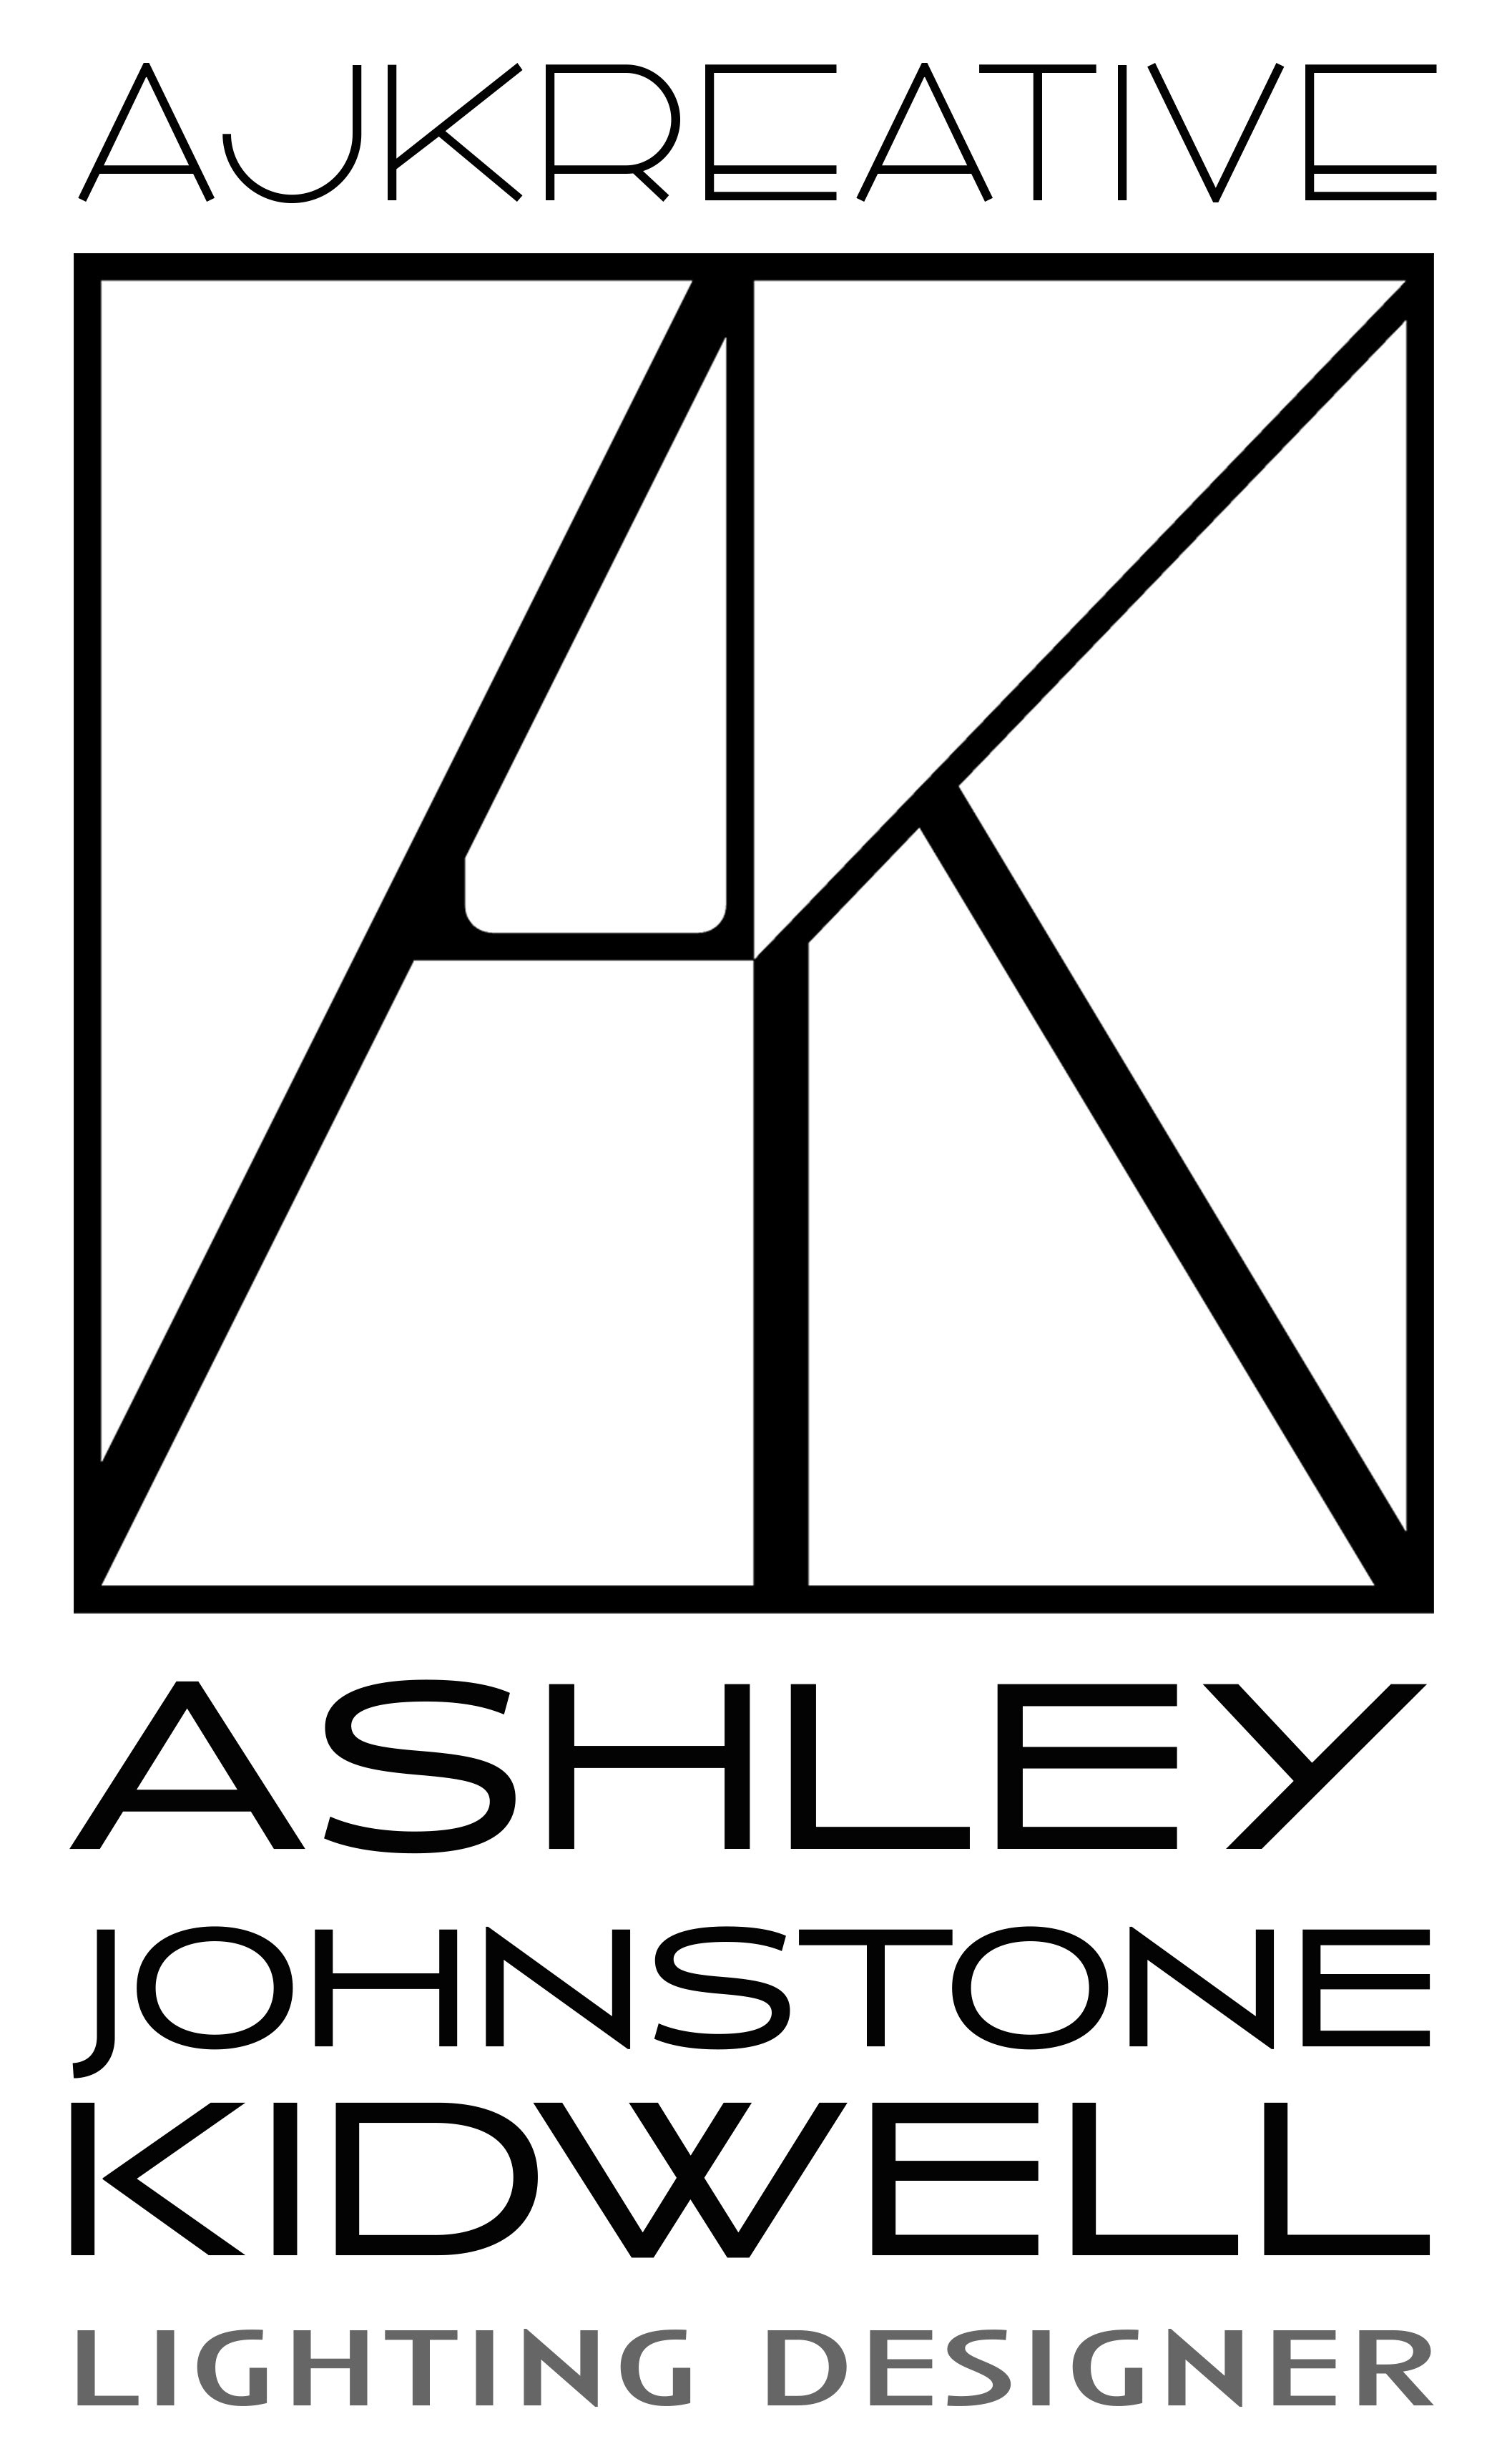 Ashley Johnstone Kidwell